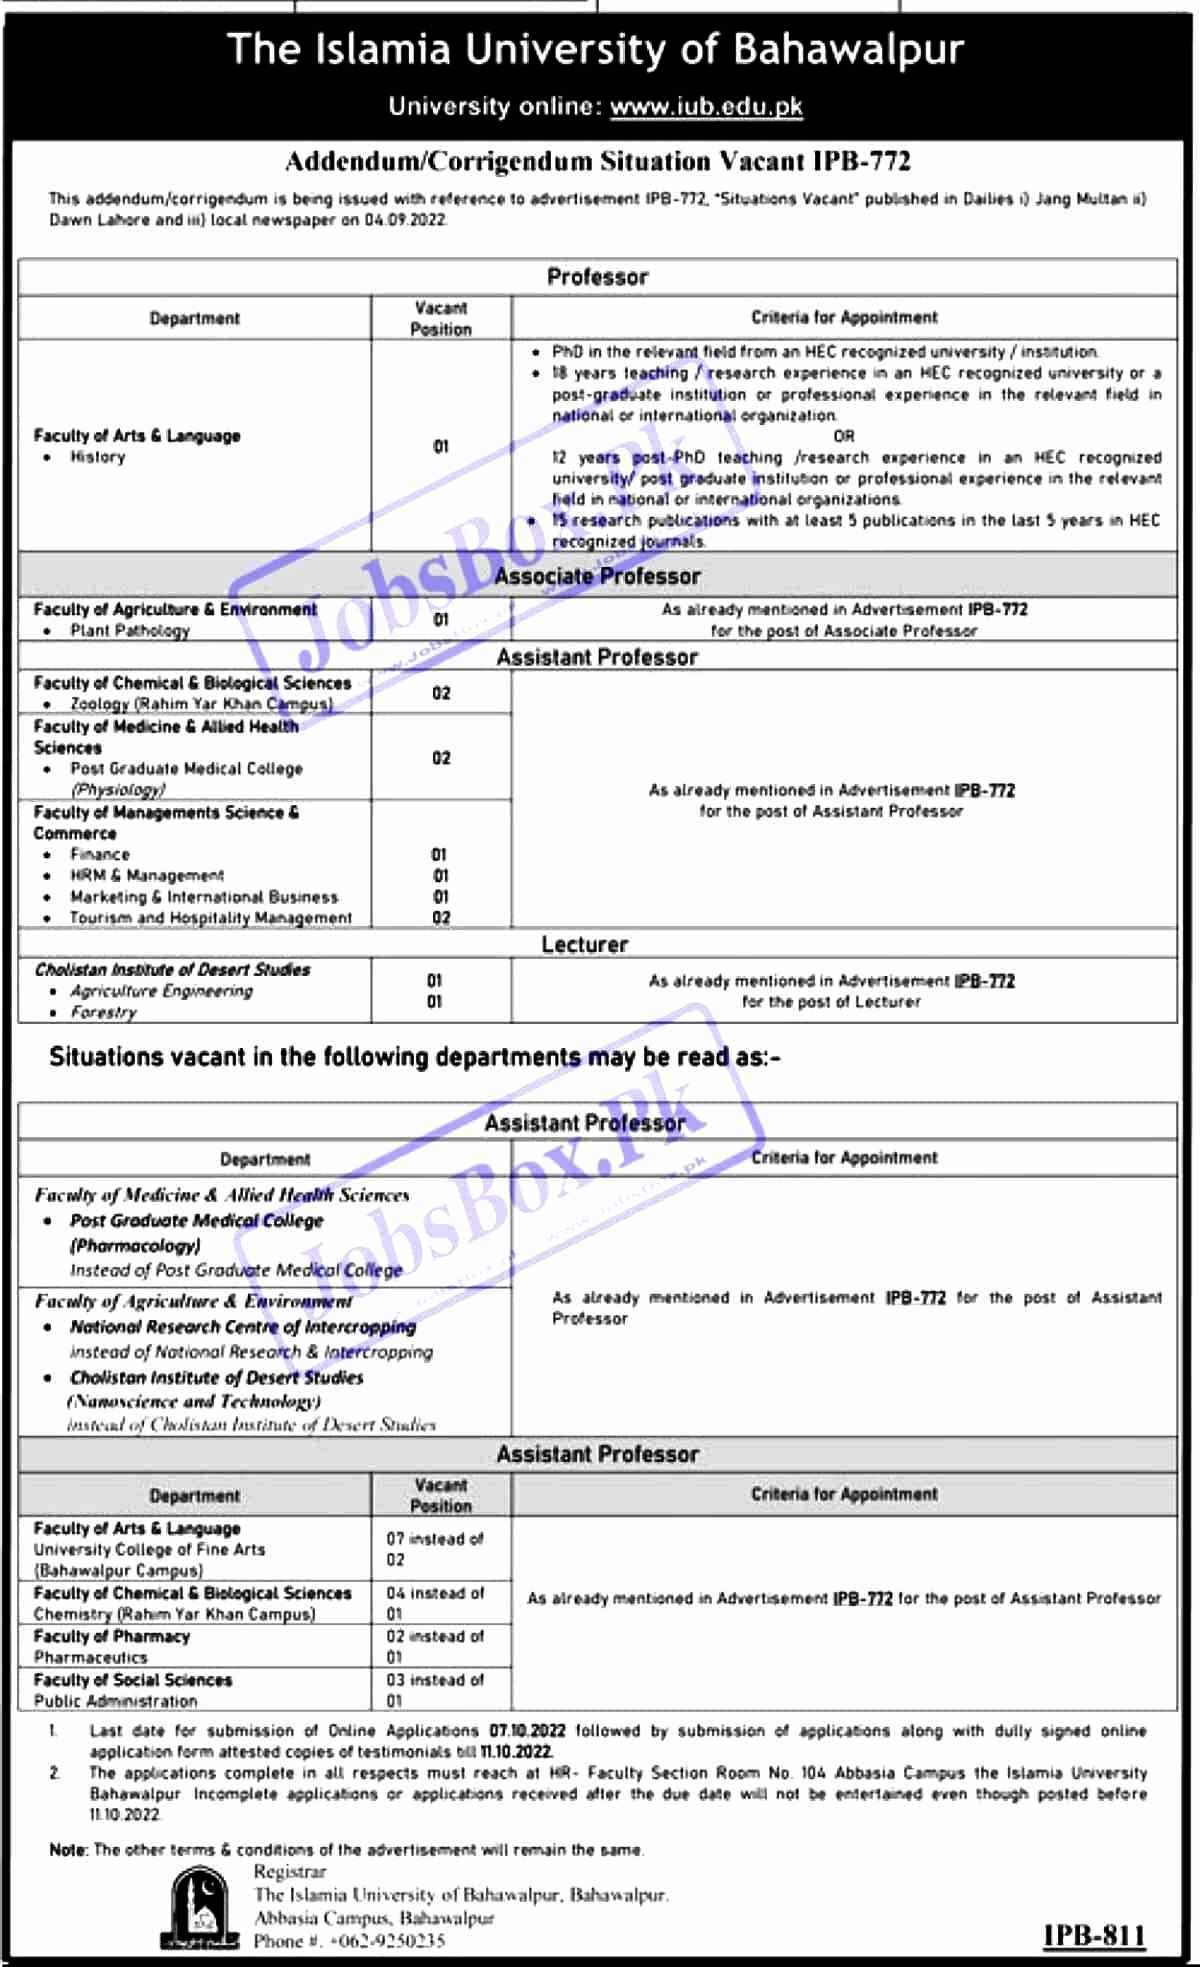 Islamia University of Bahawalpur IUB Jobs October 2022 Recruitment through IUB Job Portal https://eportal.iub.edu.pk